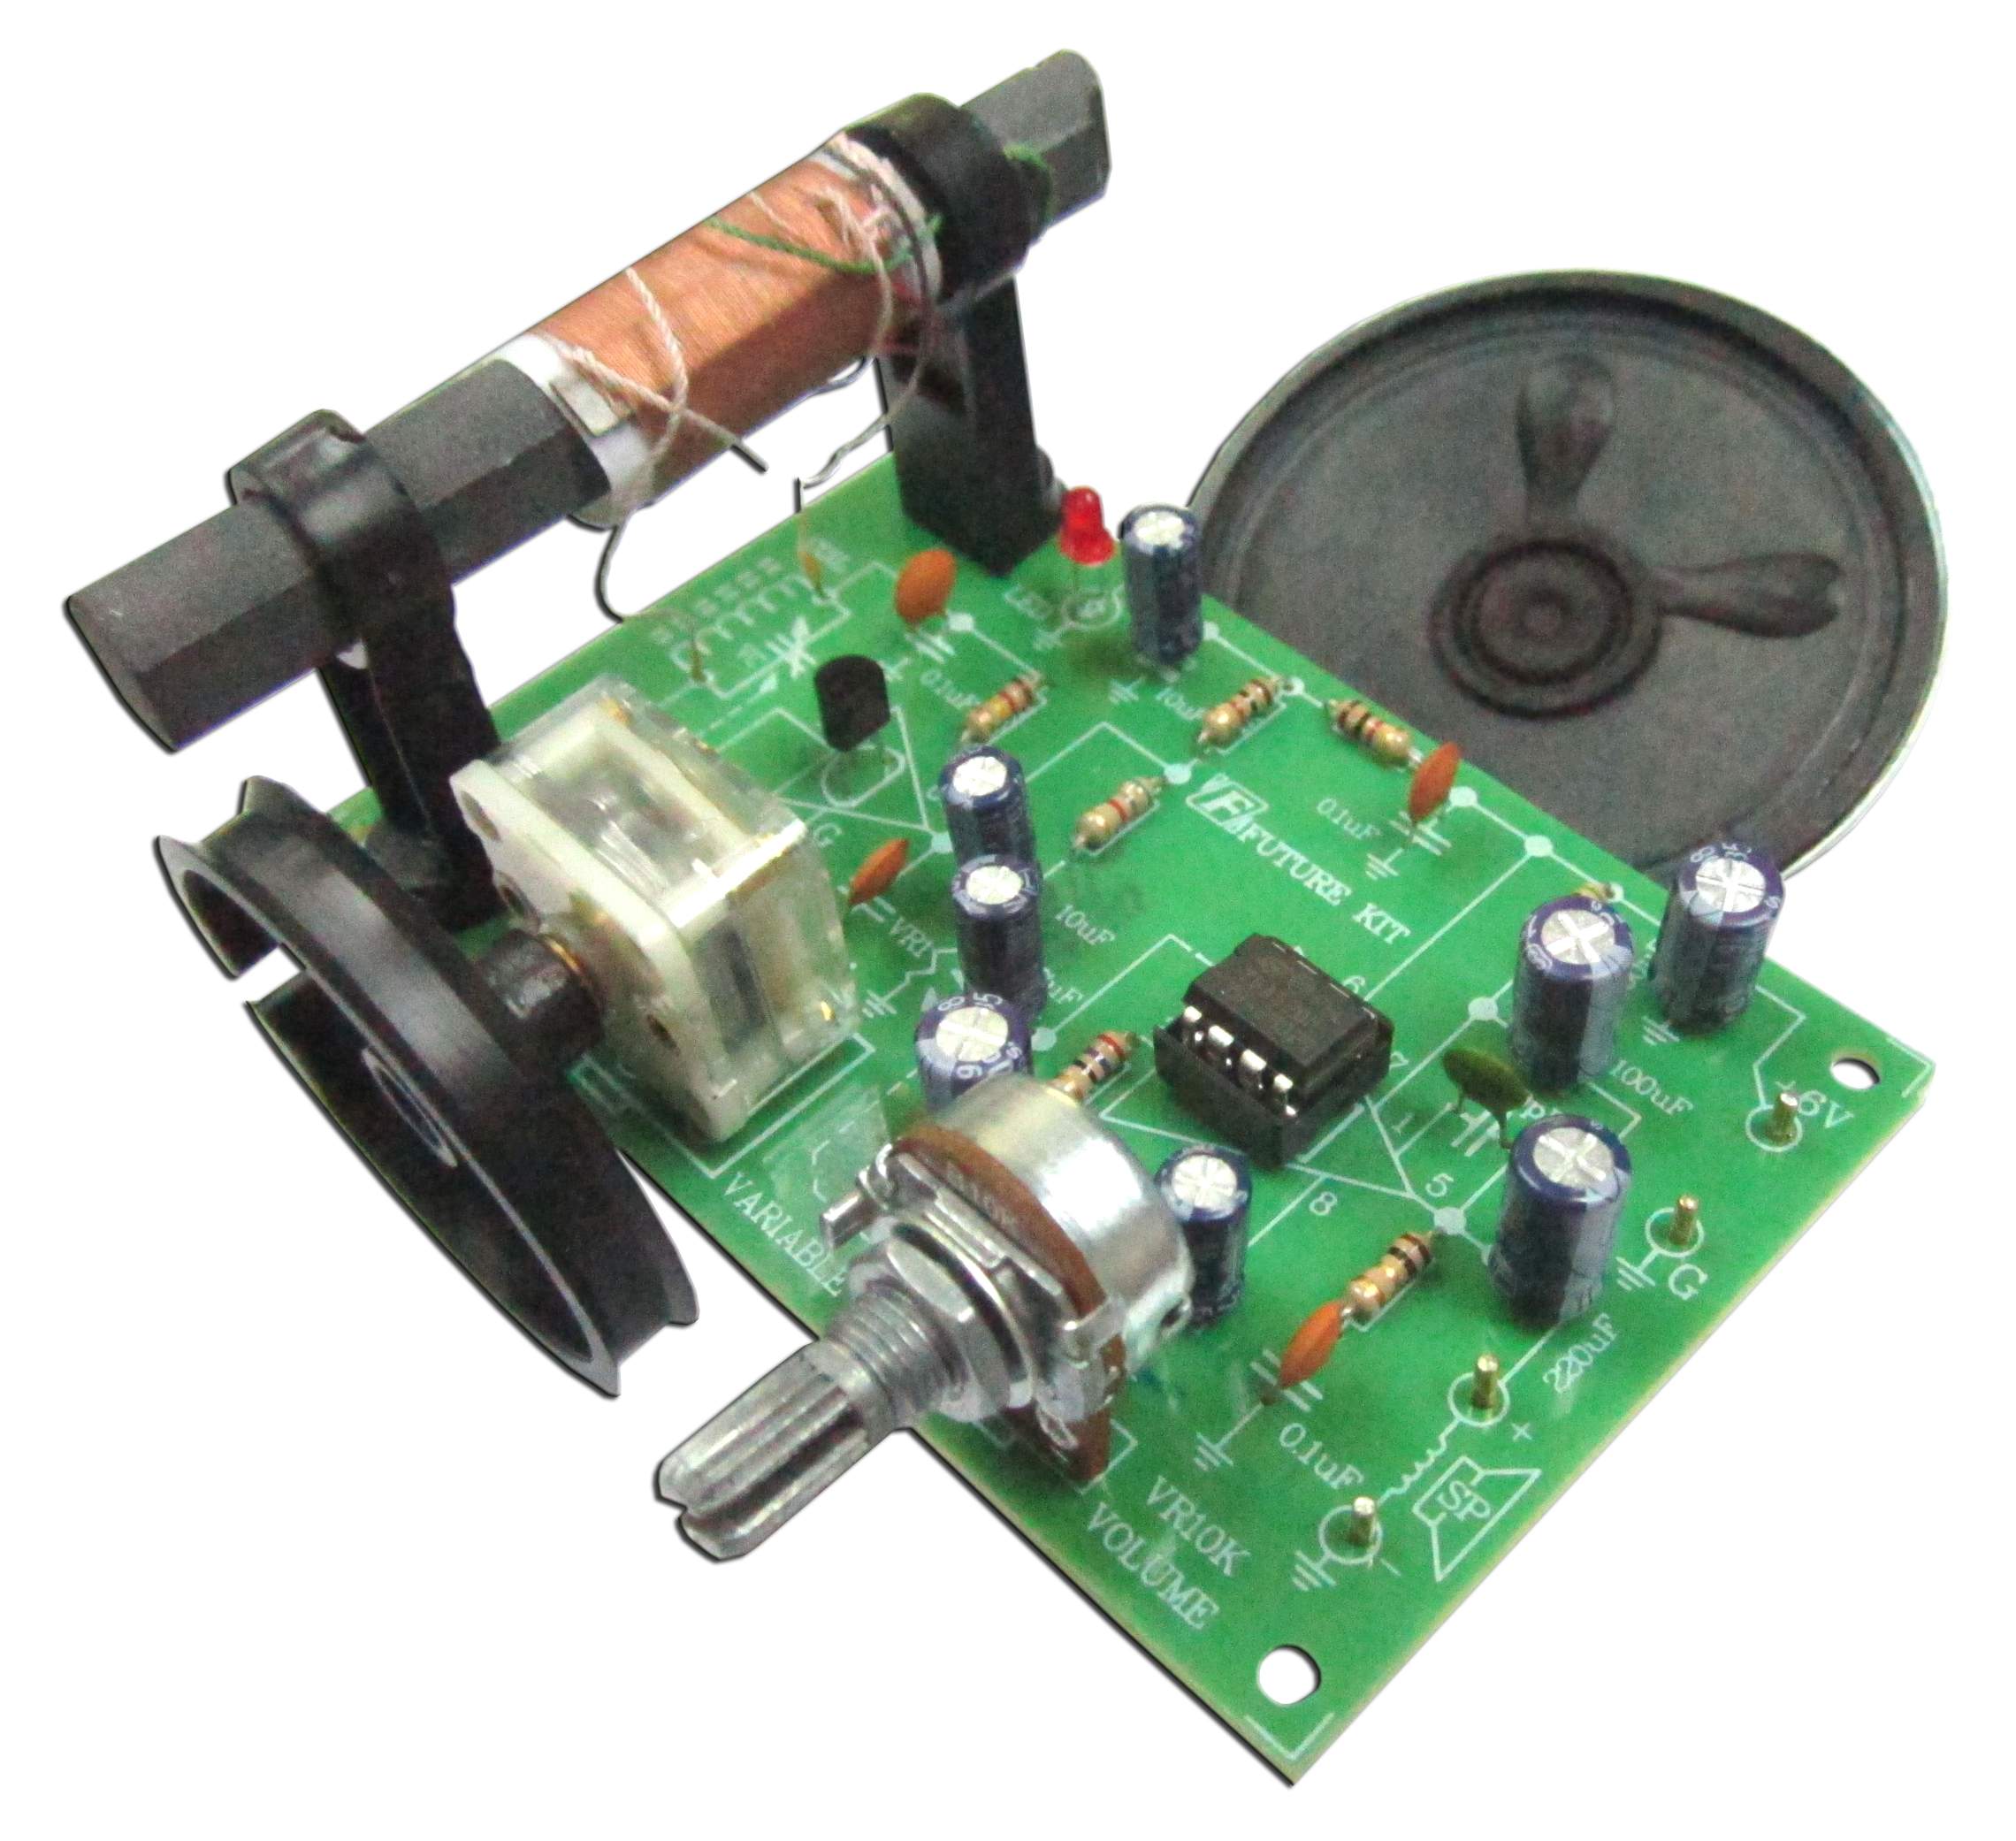 AM Radio reciever IC experiment board (kit) @ electrokit